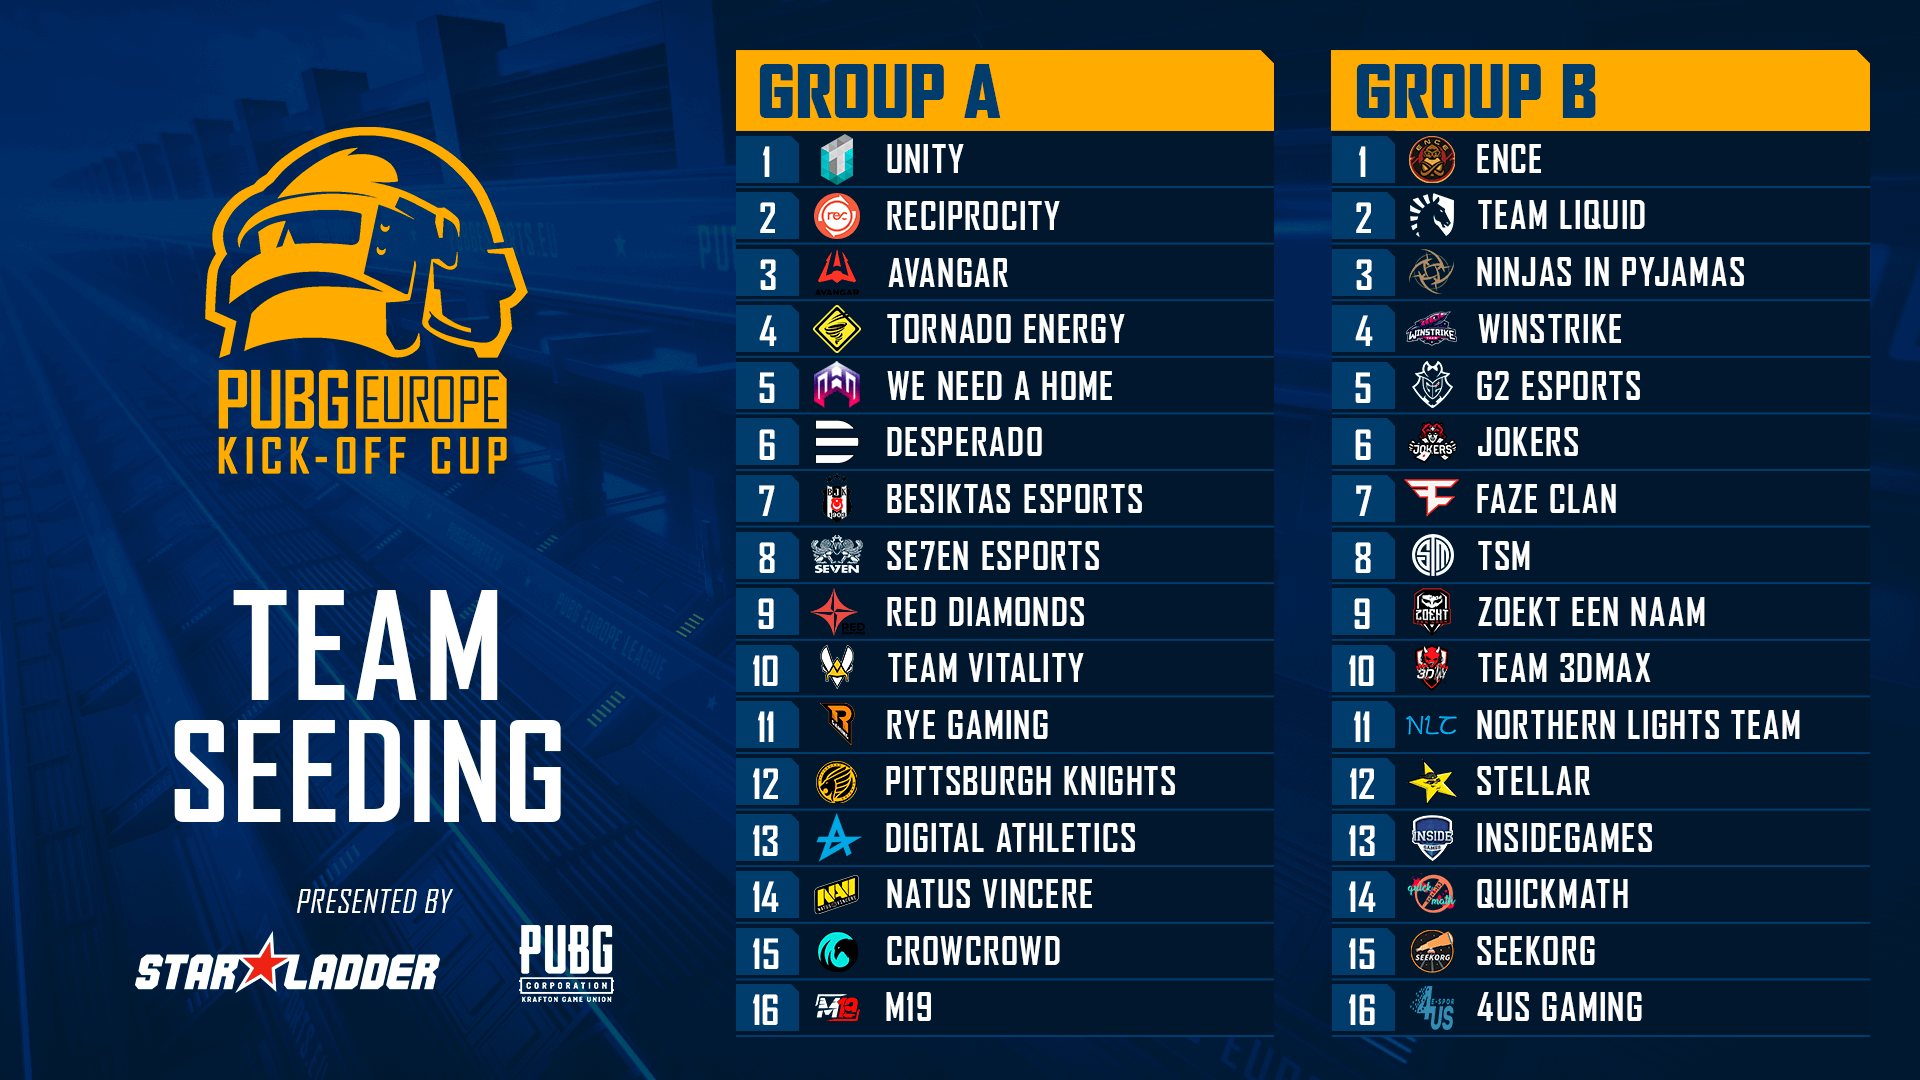 PEL Kick-off Cup 2019 Groupings 